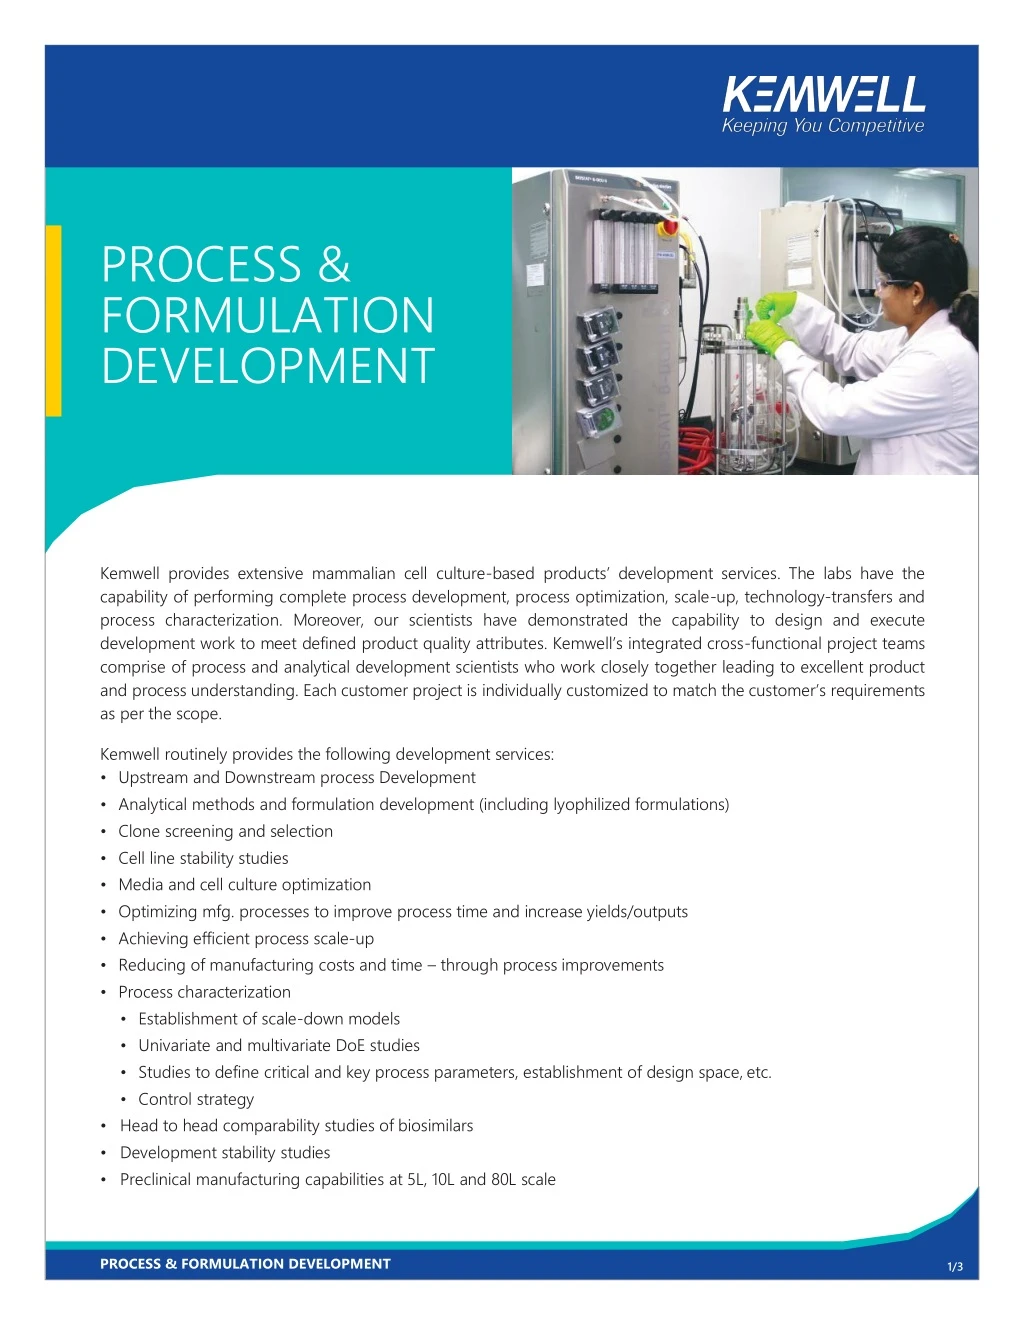 process formulation development kemwell provides